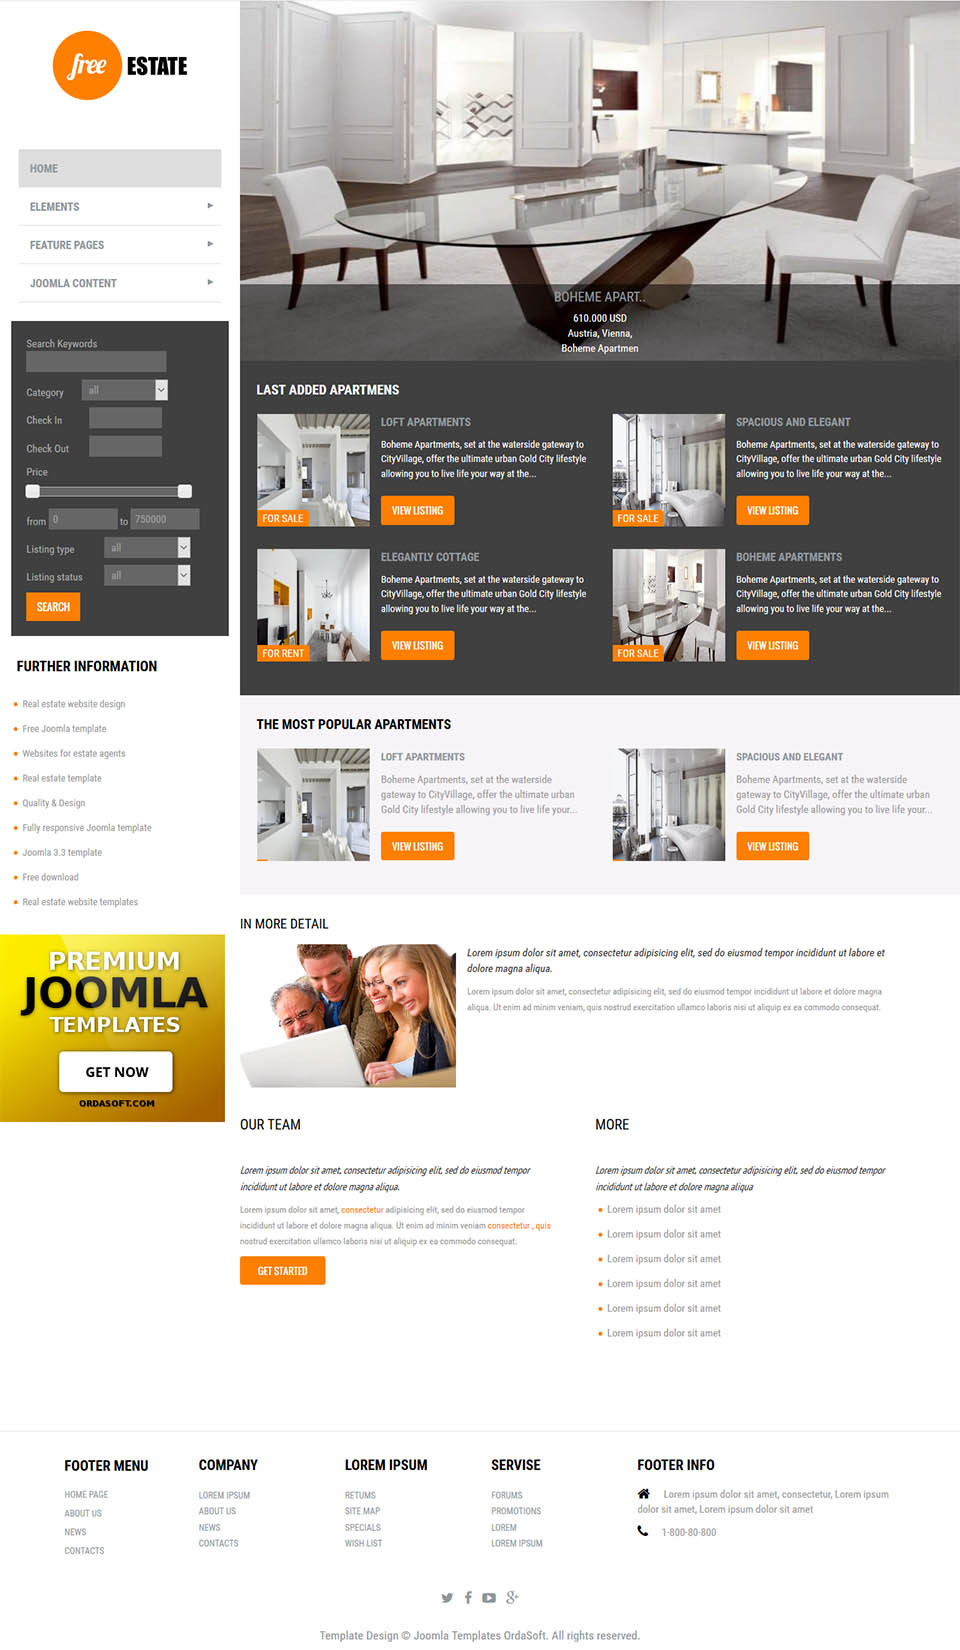 Joomla template OrdaSoft Free Estate